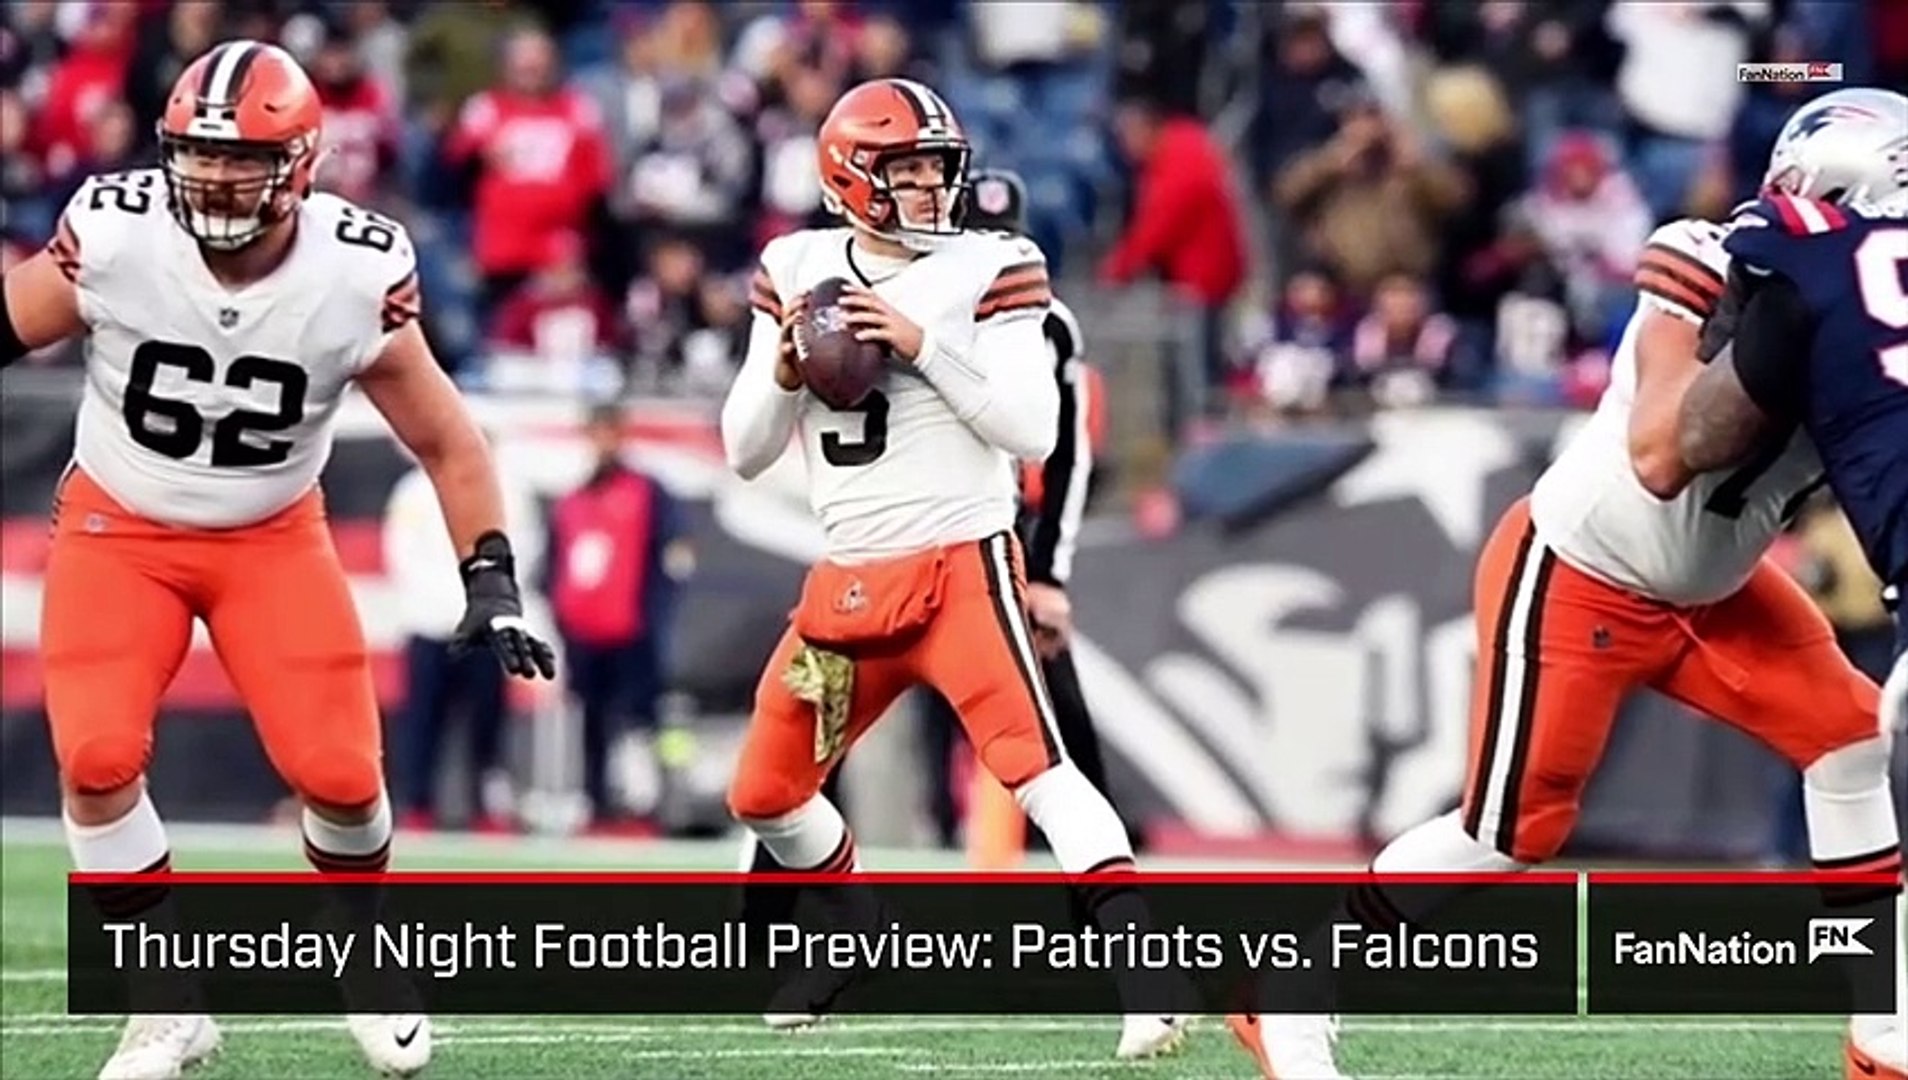 Thursday Night Football Preview: Patriots at Falcons